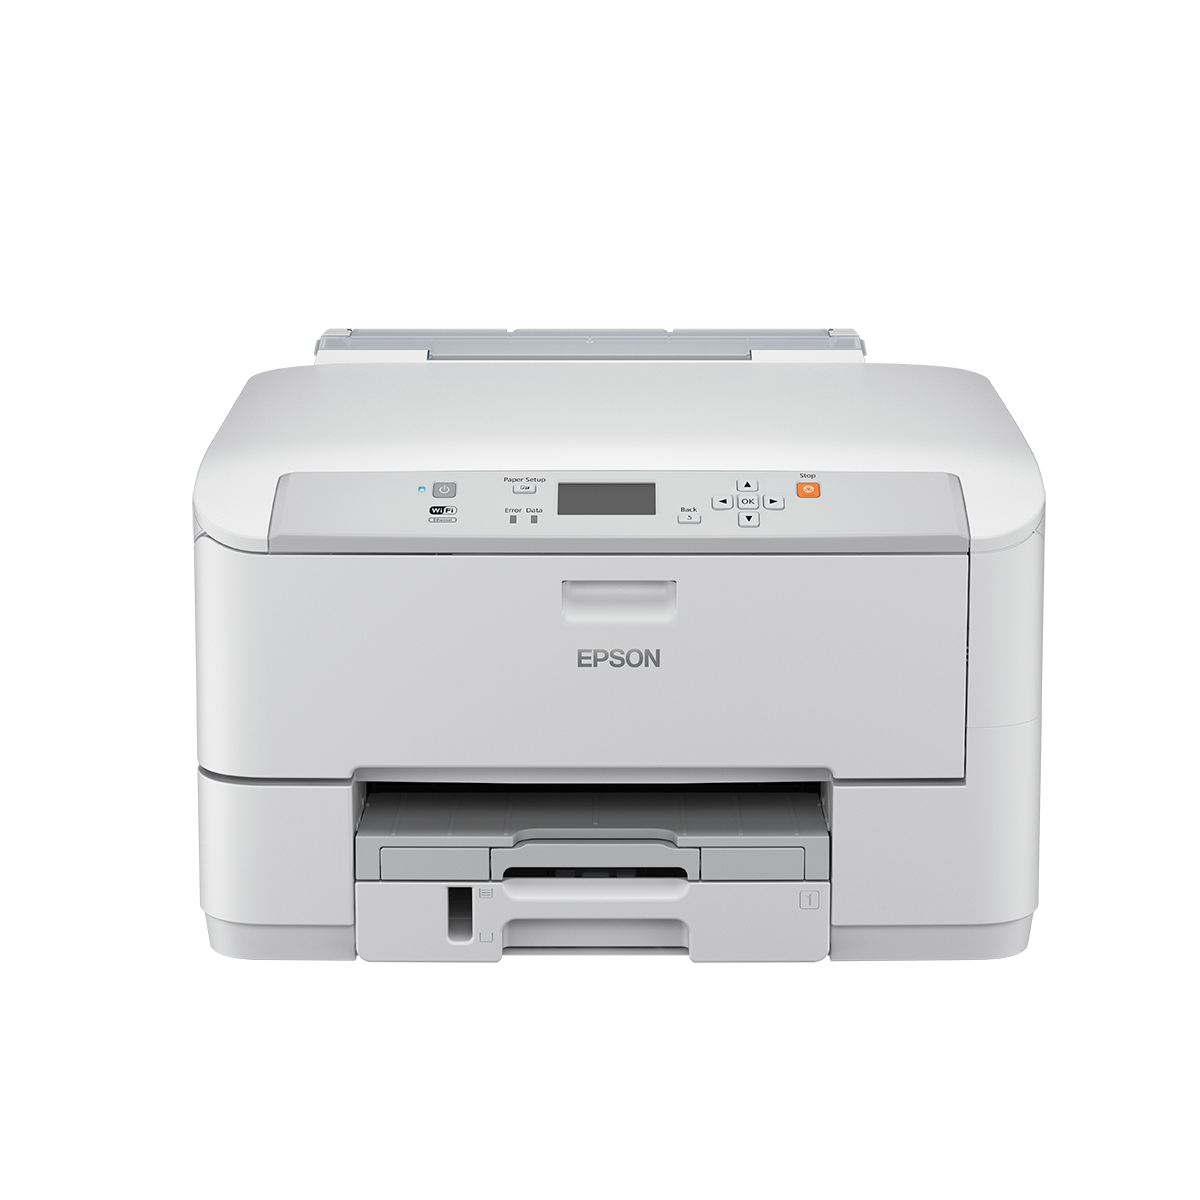 Epson WF-M5160/WF-M5190  Series Printer - Featured